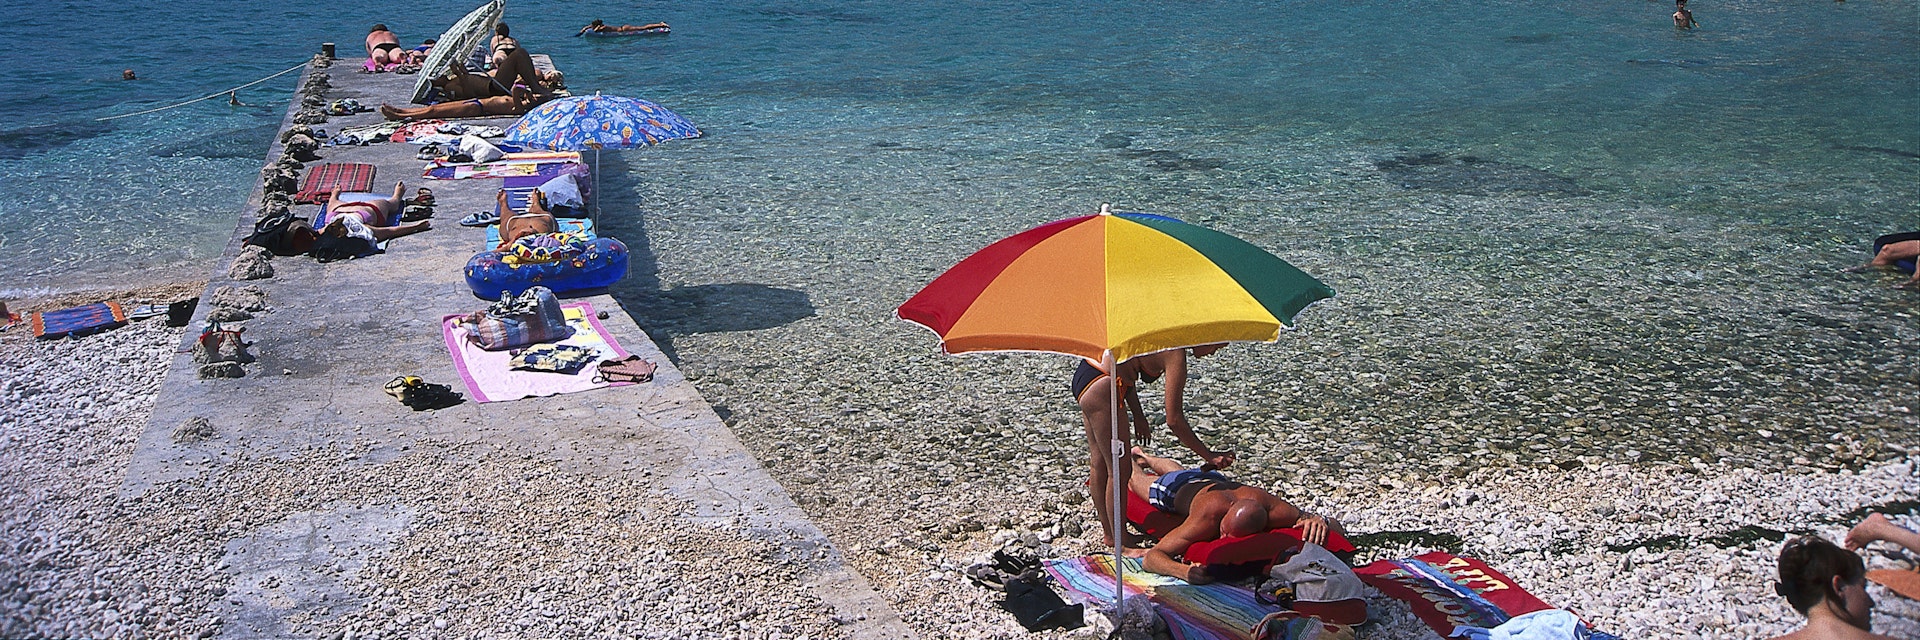 People on the beach in the sunlight, Baska, Krk, Croatia, Europe